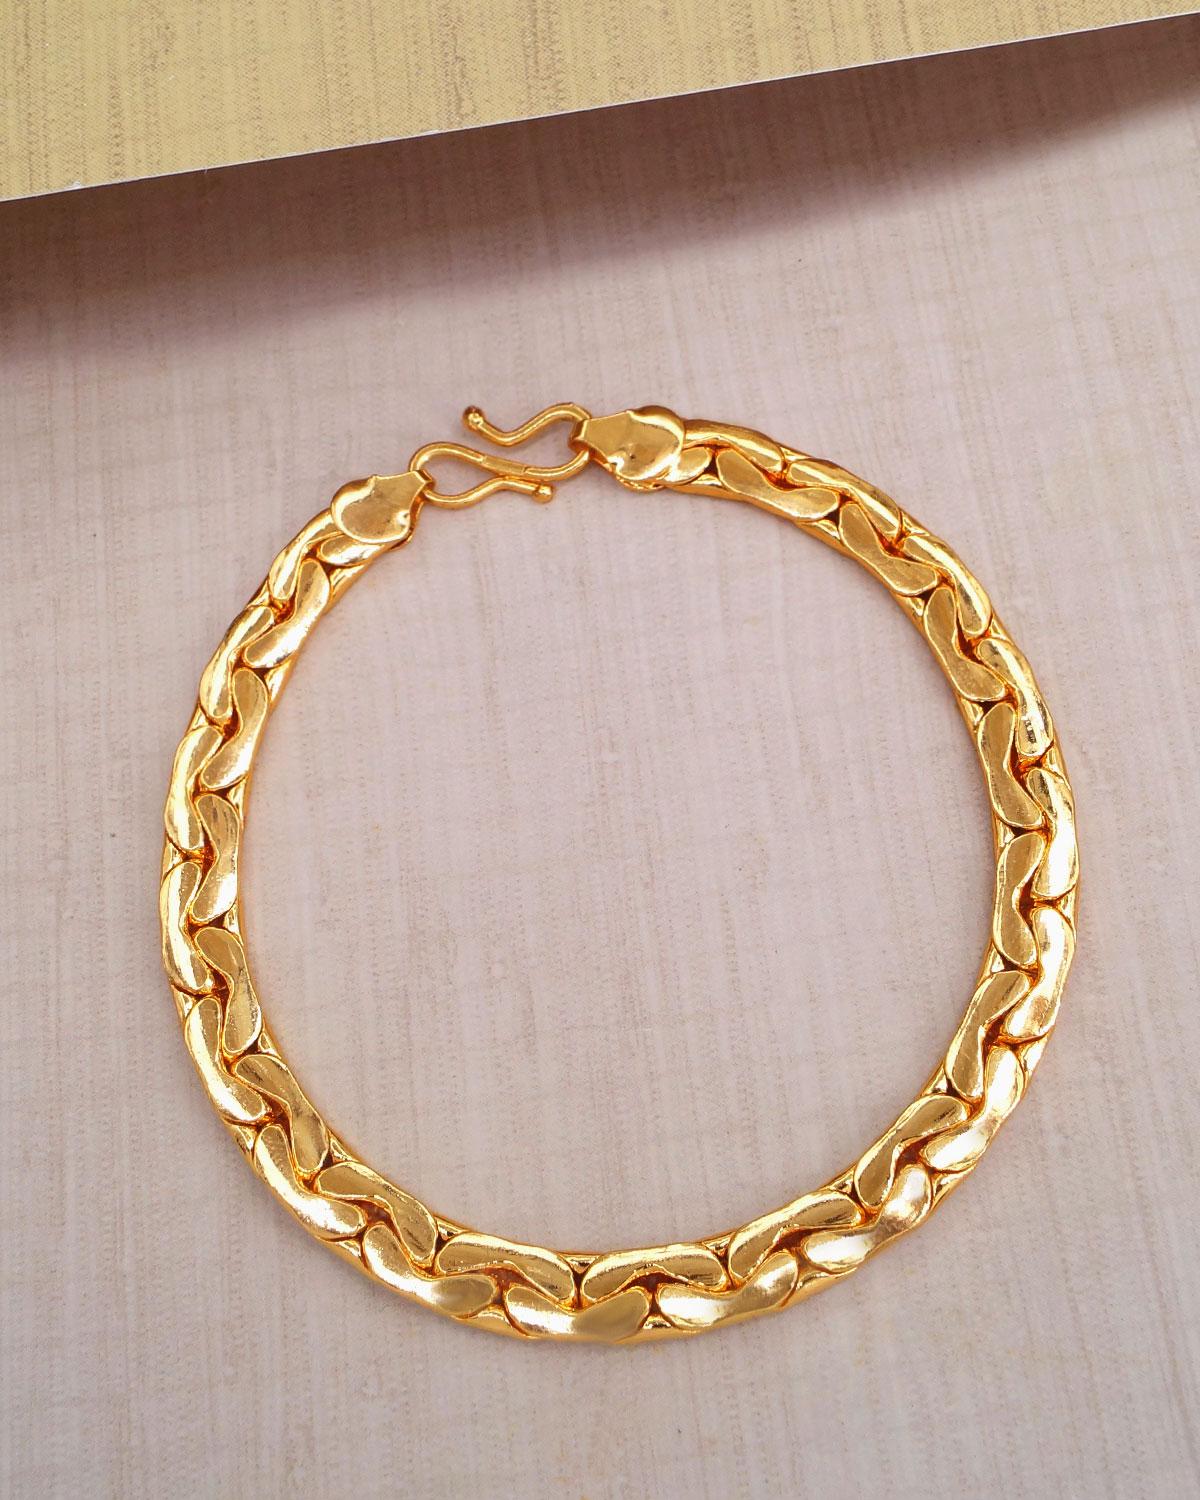 Everyday Wear Thick Gold Bracelets For Men